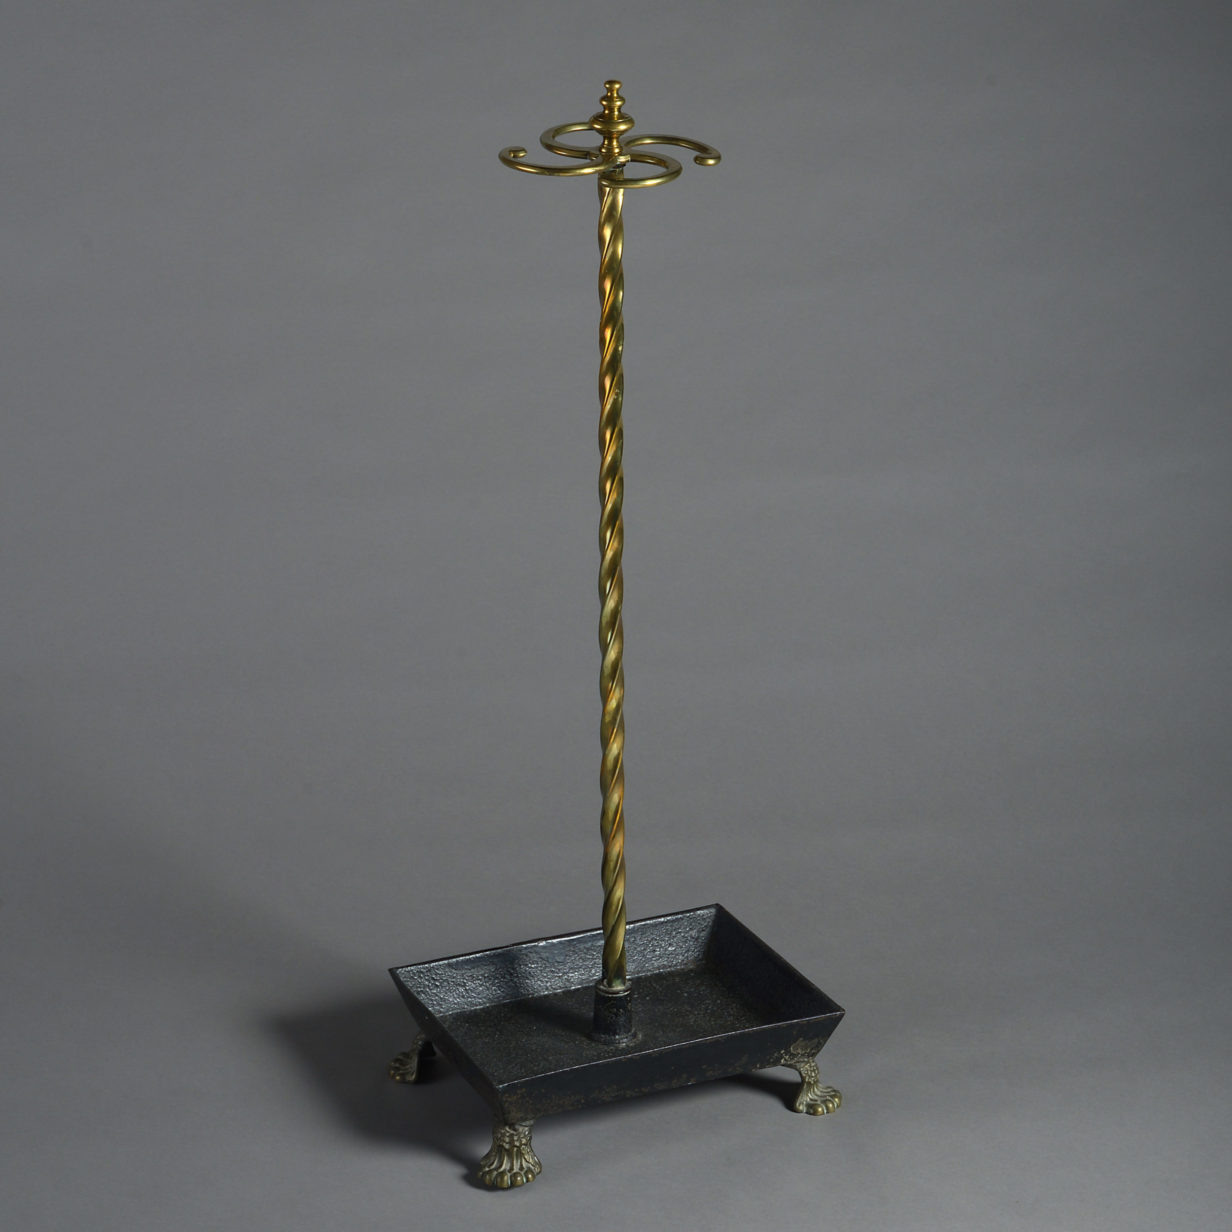 Mid-19th century victorian brass stick or umbrella stand